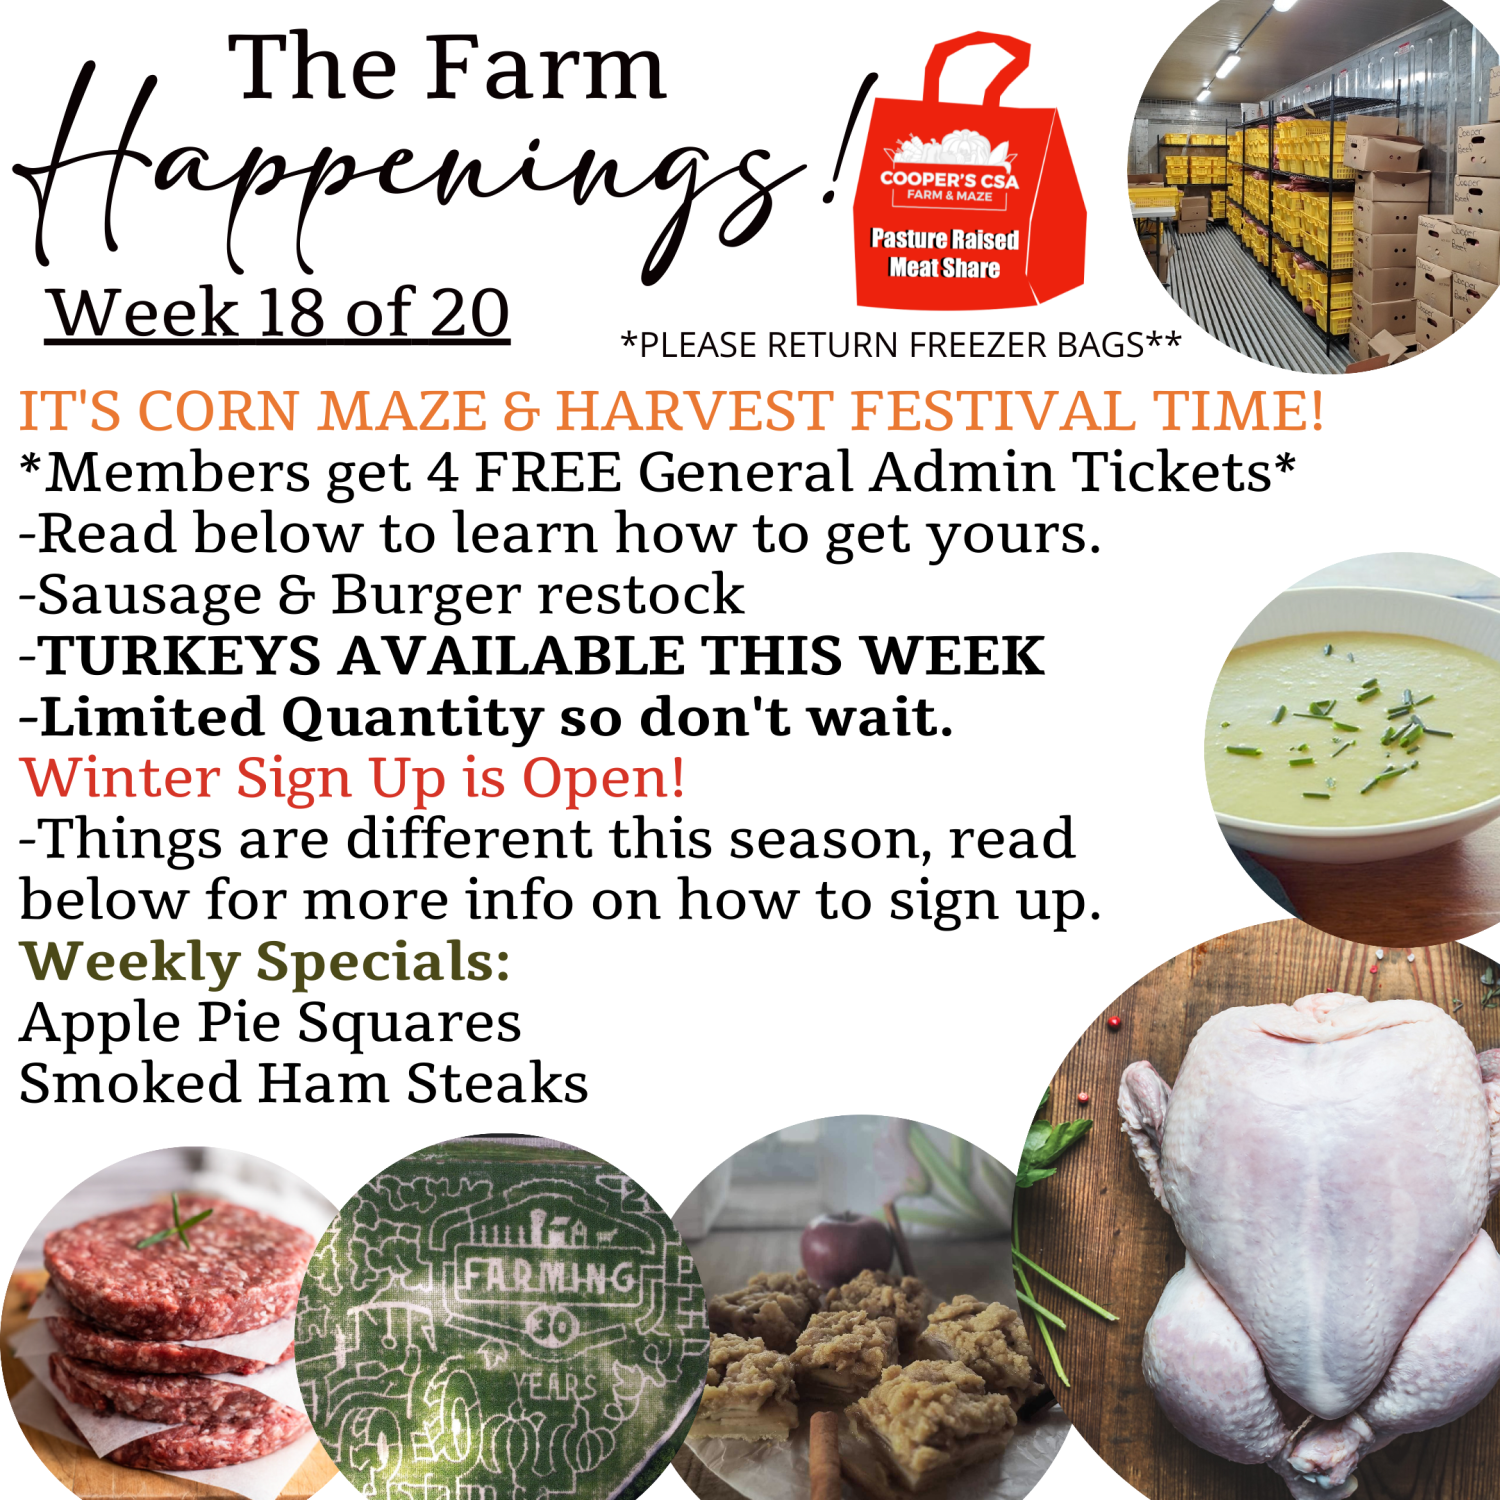 Next Happening: "Pasture Meat Shares"-Coopers CSA Farm Farm Happenings Week 18